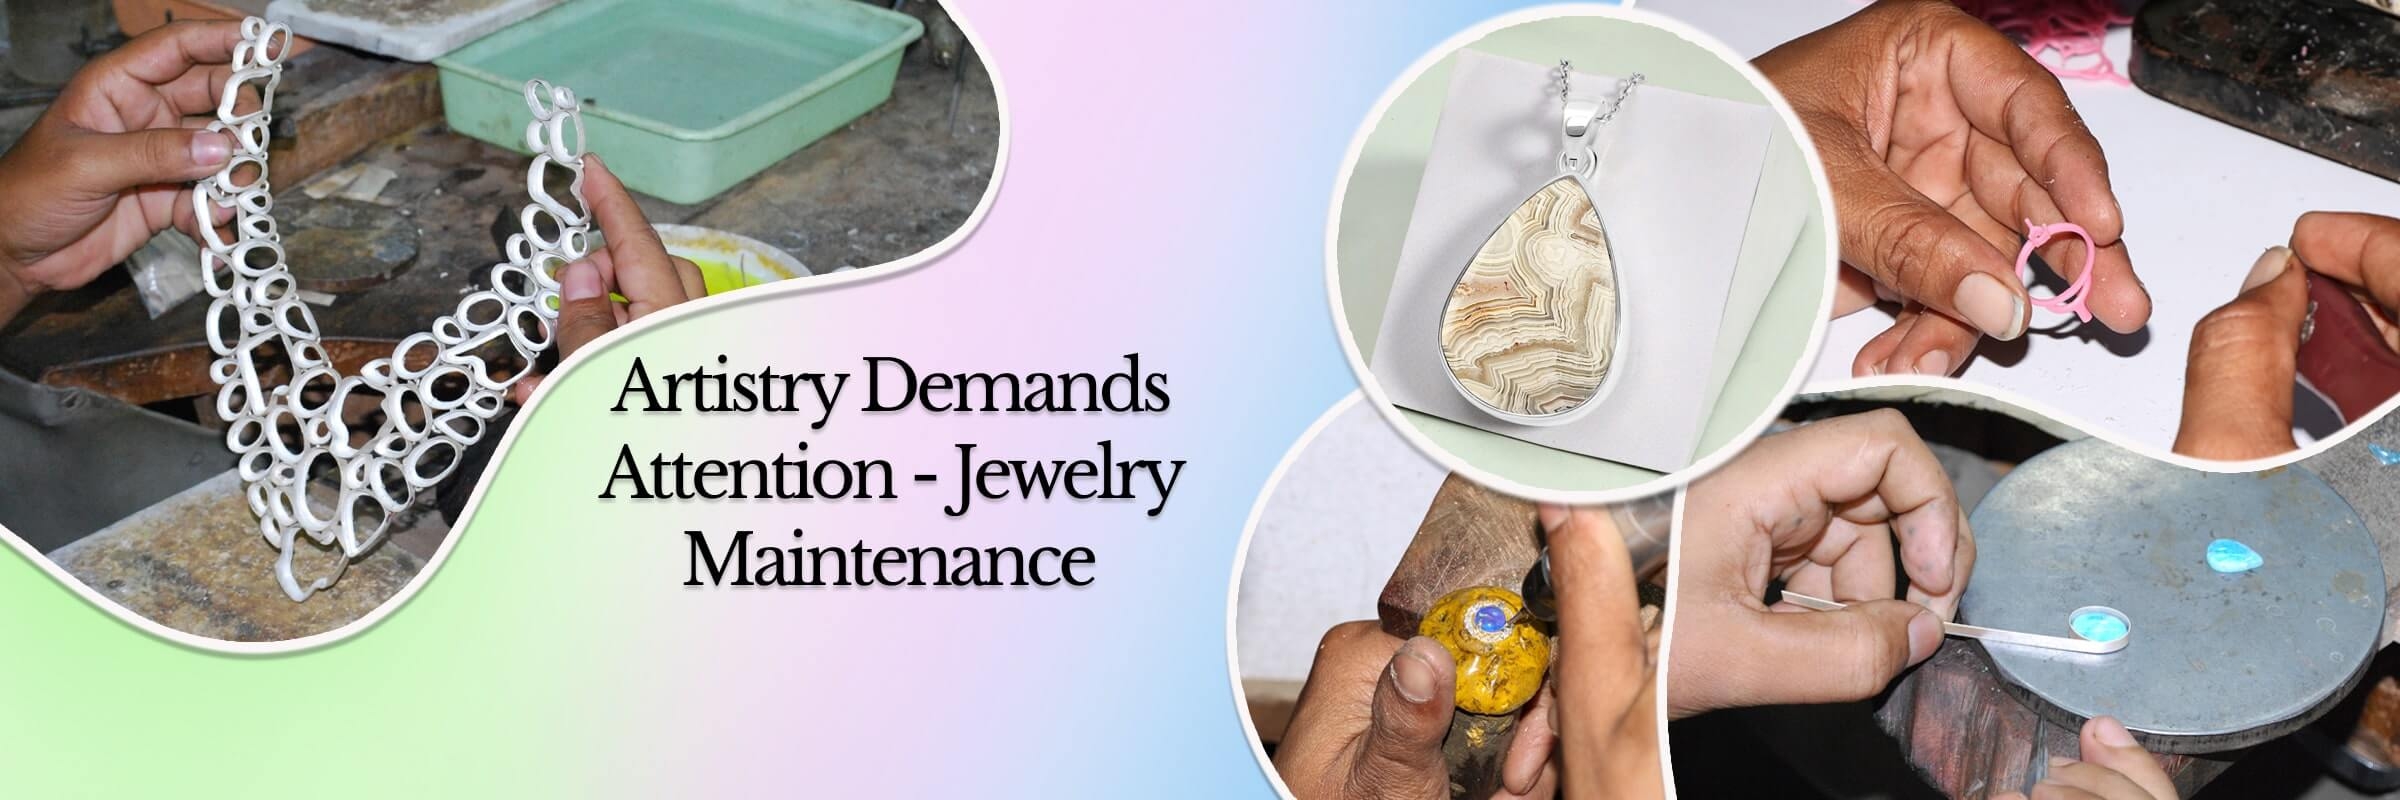 Handmade jewelry require care and maintenance